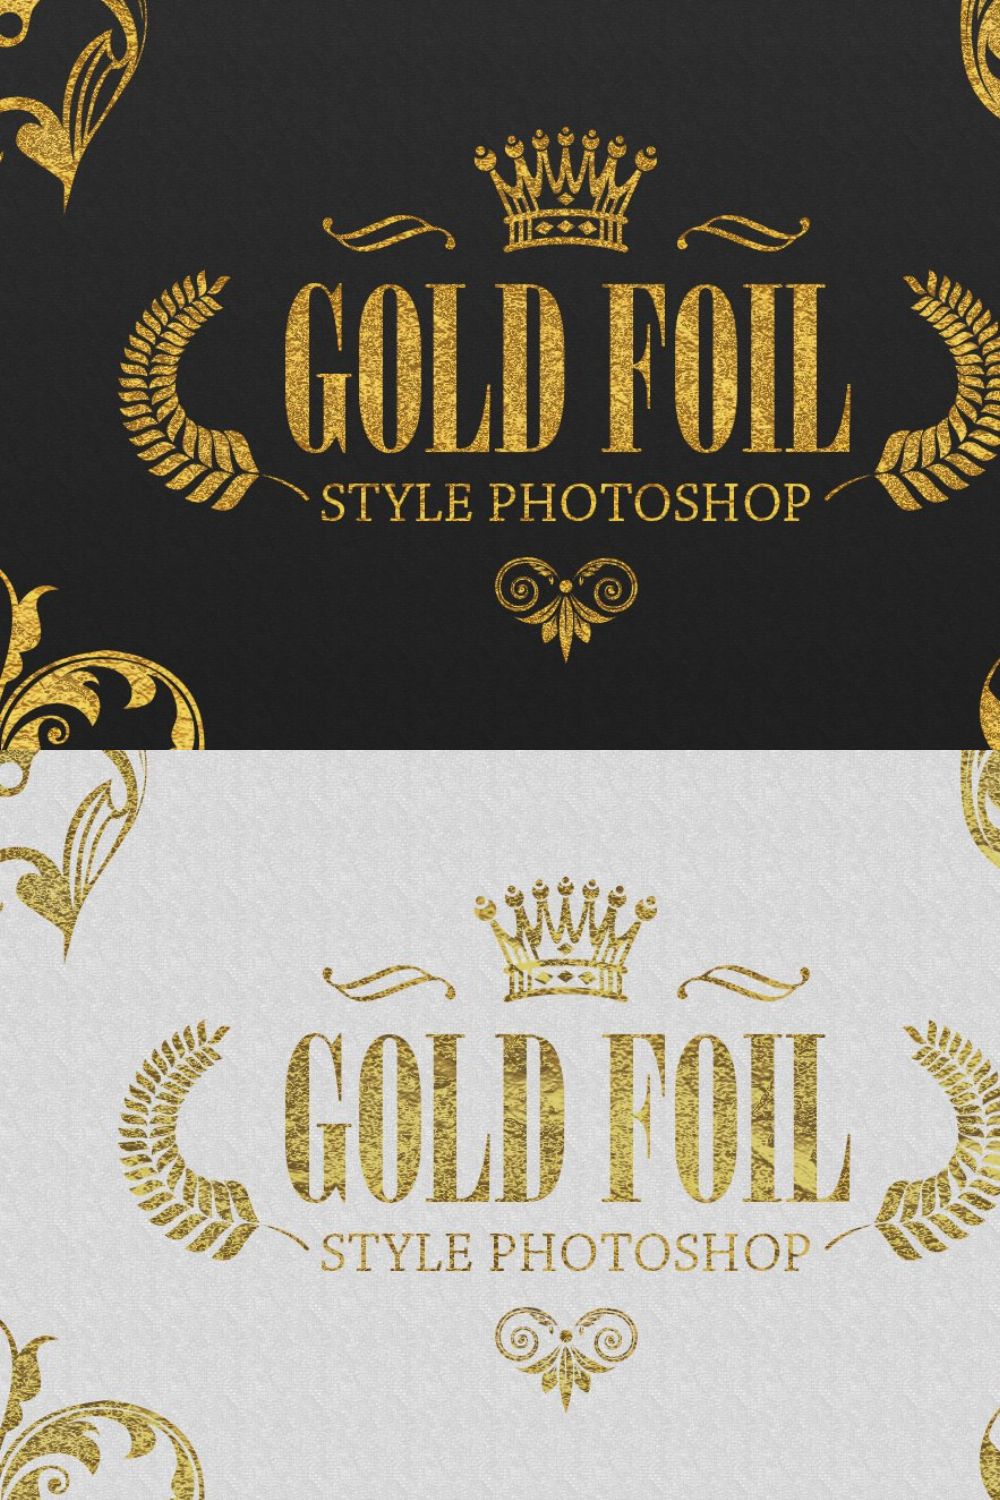 36 Gold Foil Style Photoshop pinterest preview image.